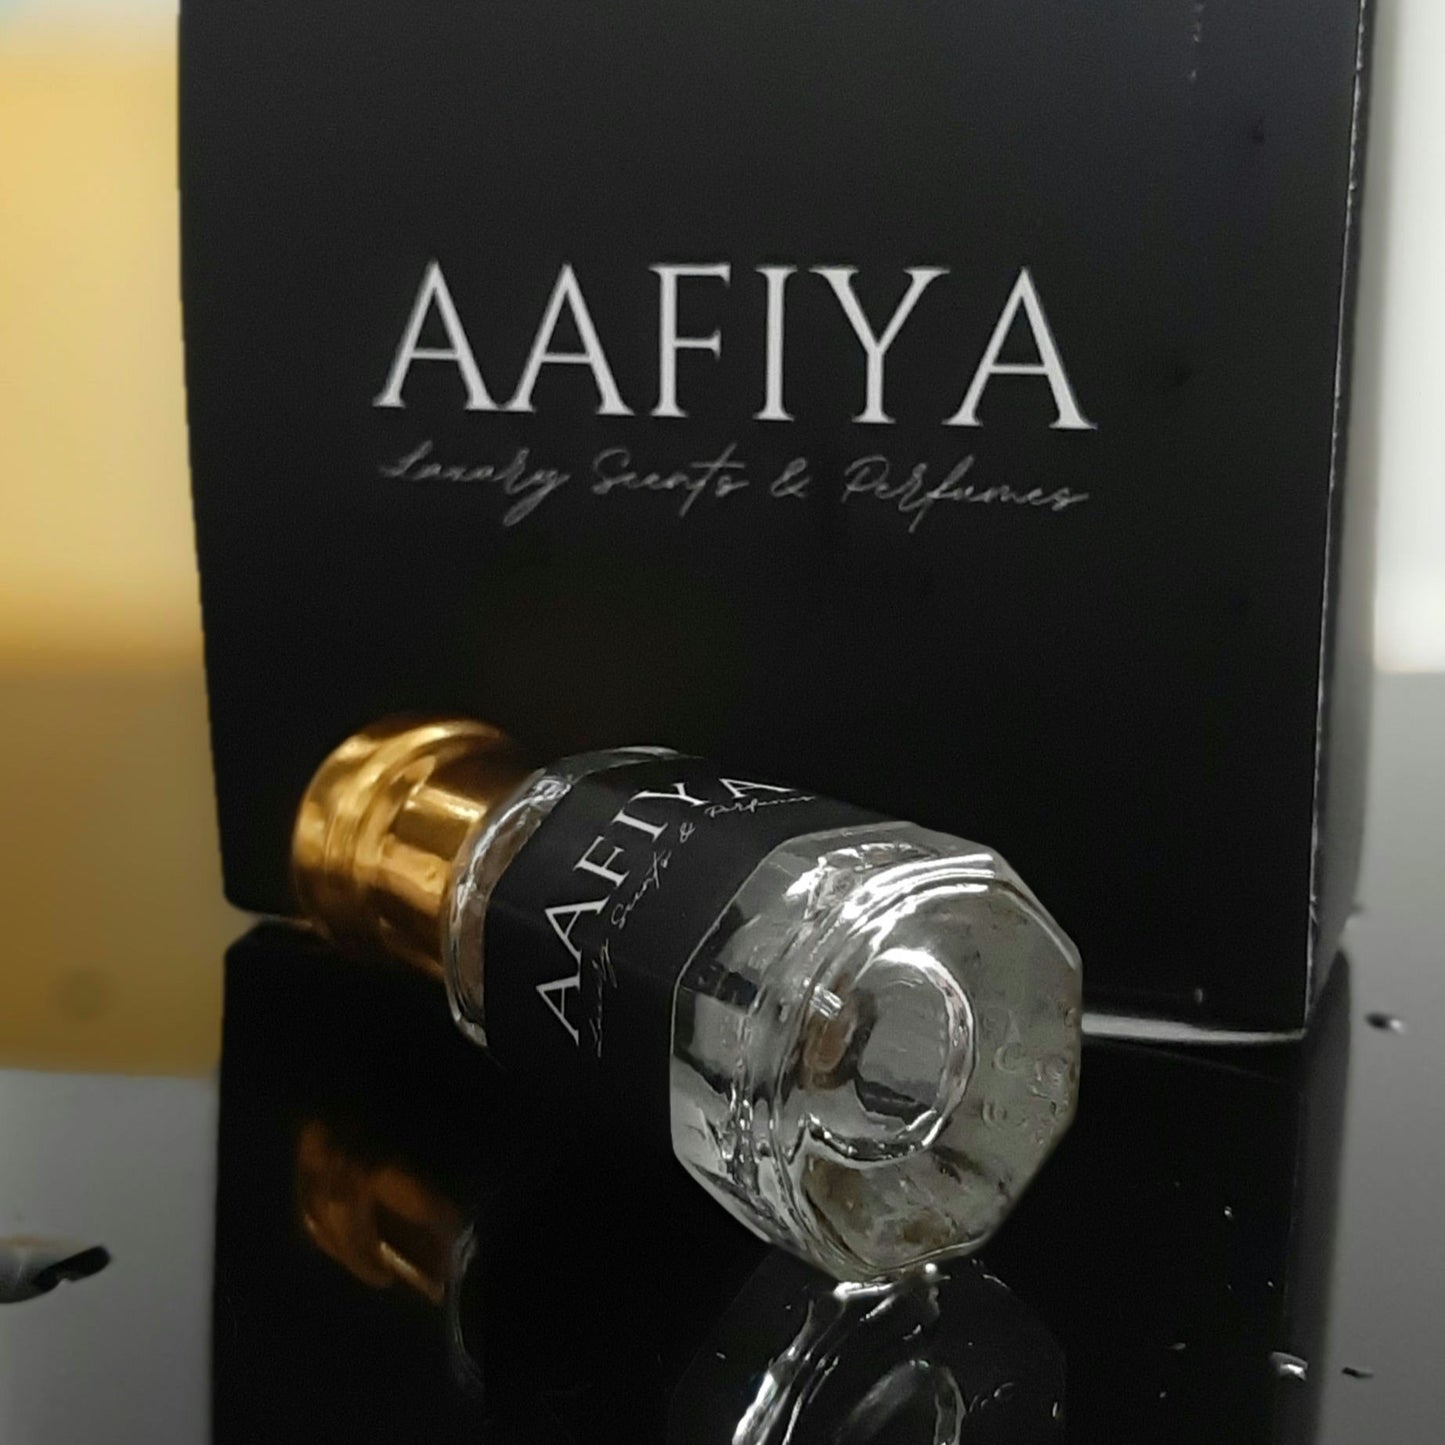 Another Oud - Aafiya Luxury Scents & Perfumes